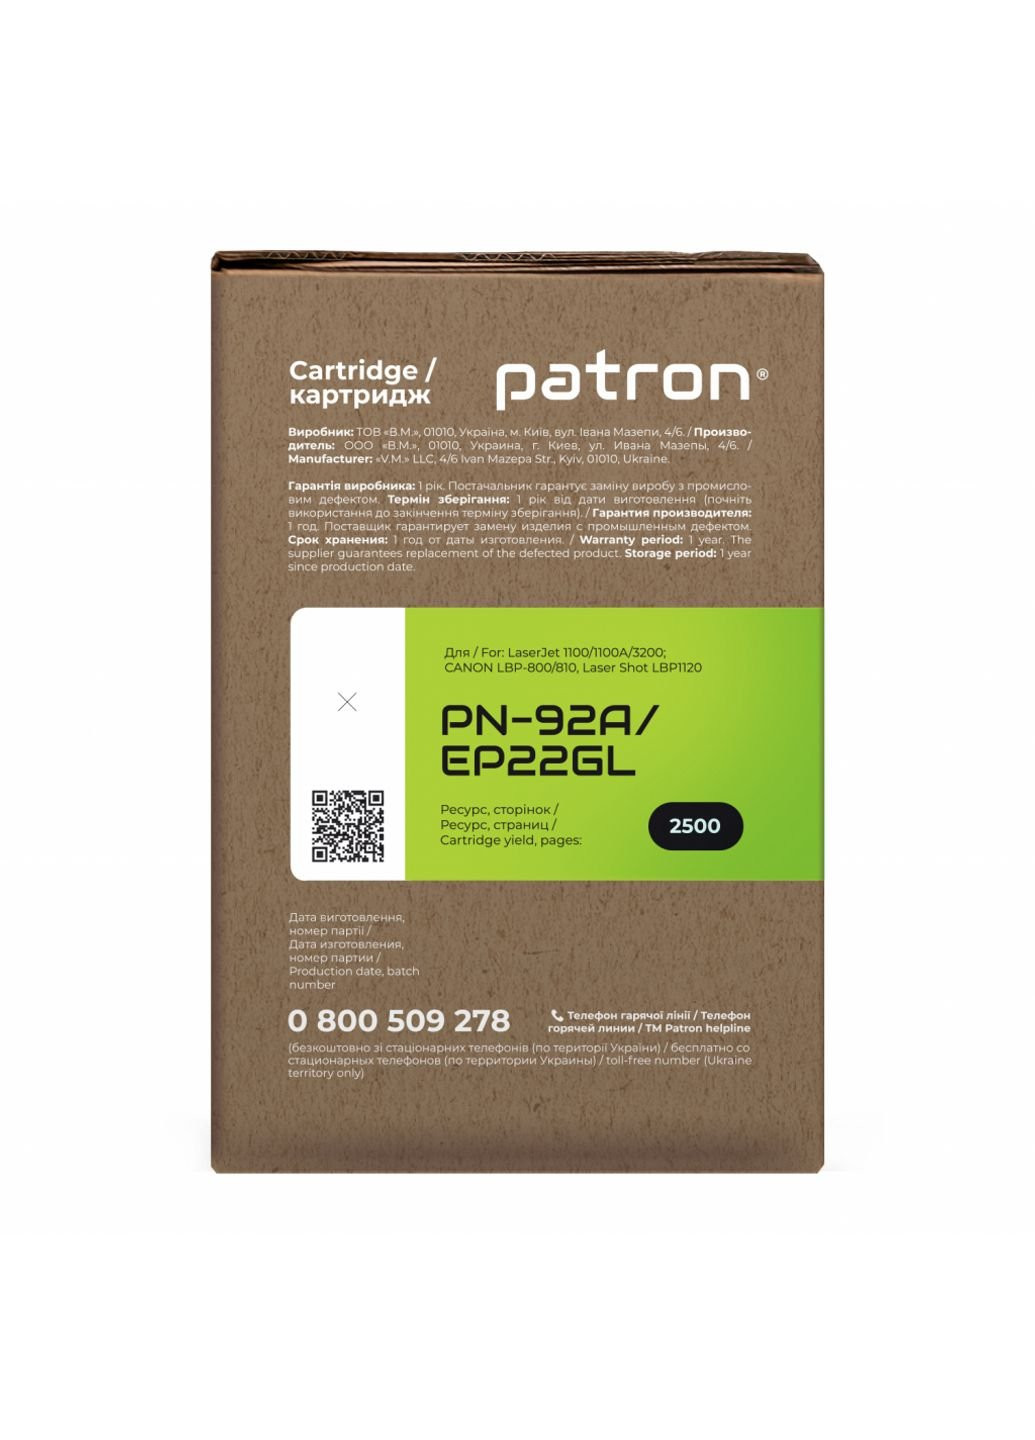 Картридж HP 92A (C4092A) / CANON EP-22 GREEN Label (PN-92A / EP22GL) Patron hp 92a (c4092a)/canon ep-22 green label (247619343)